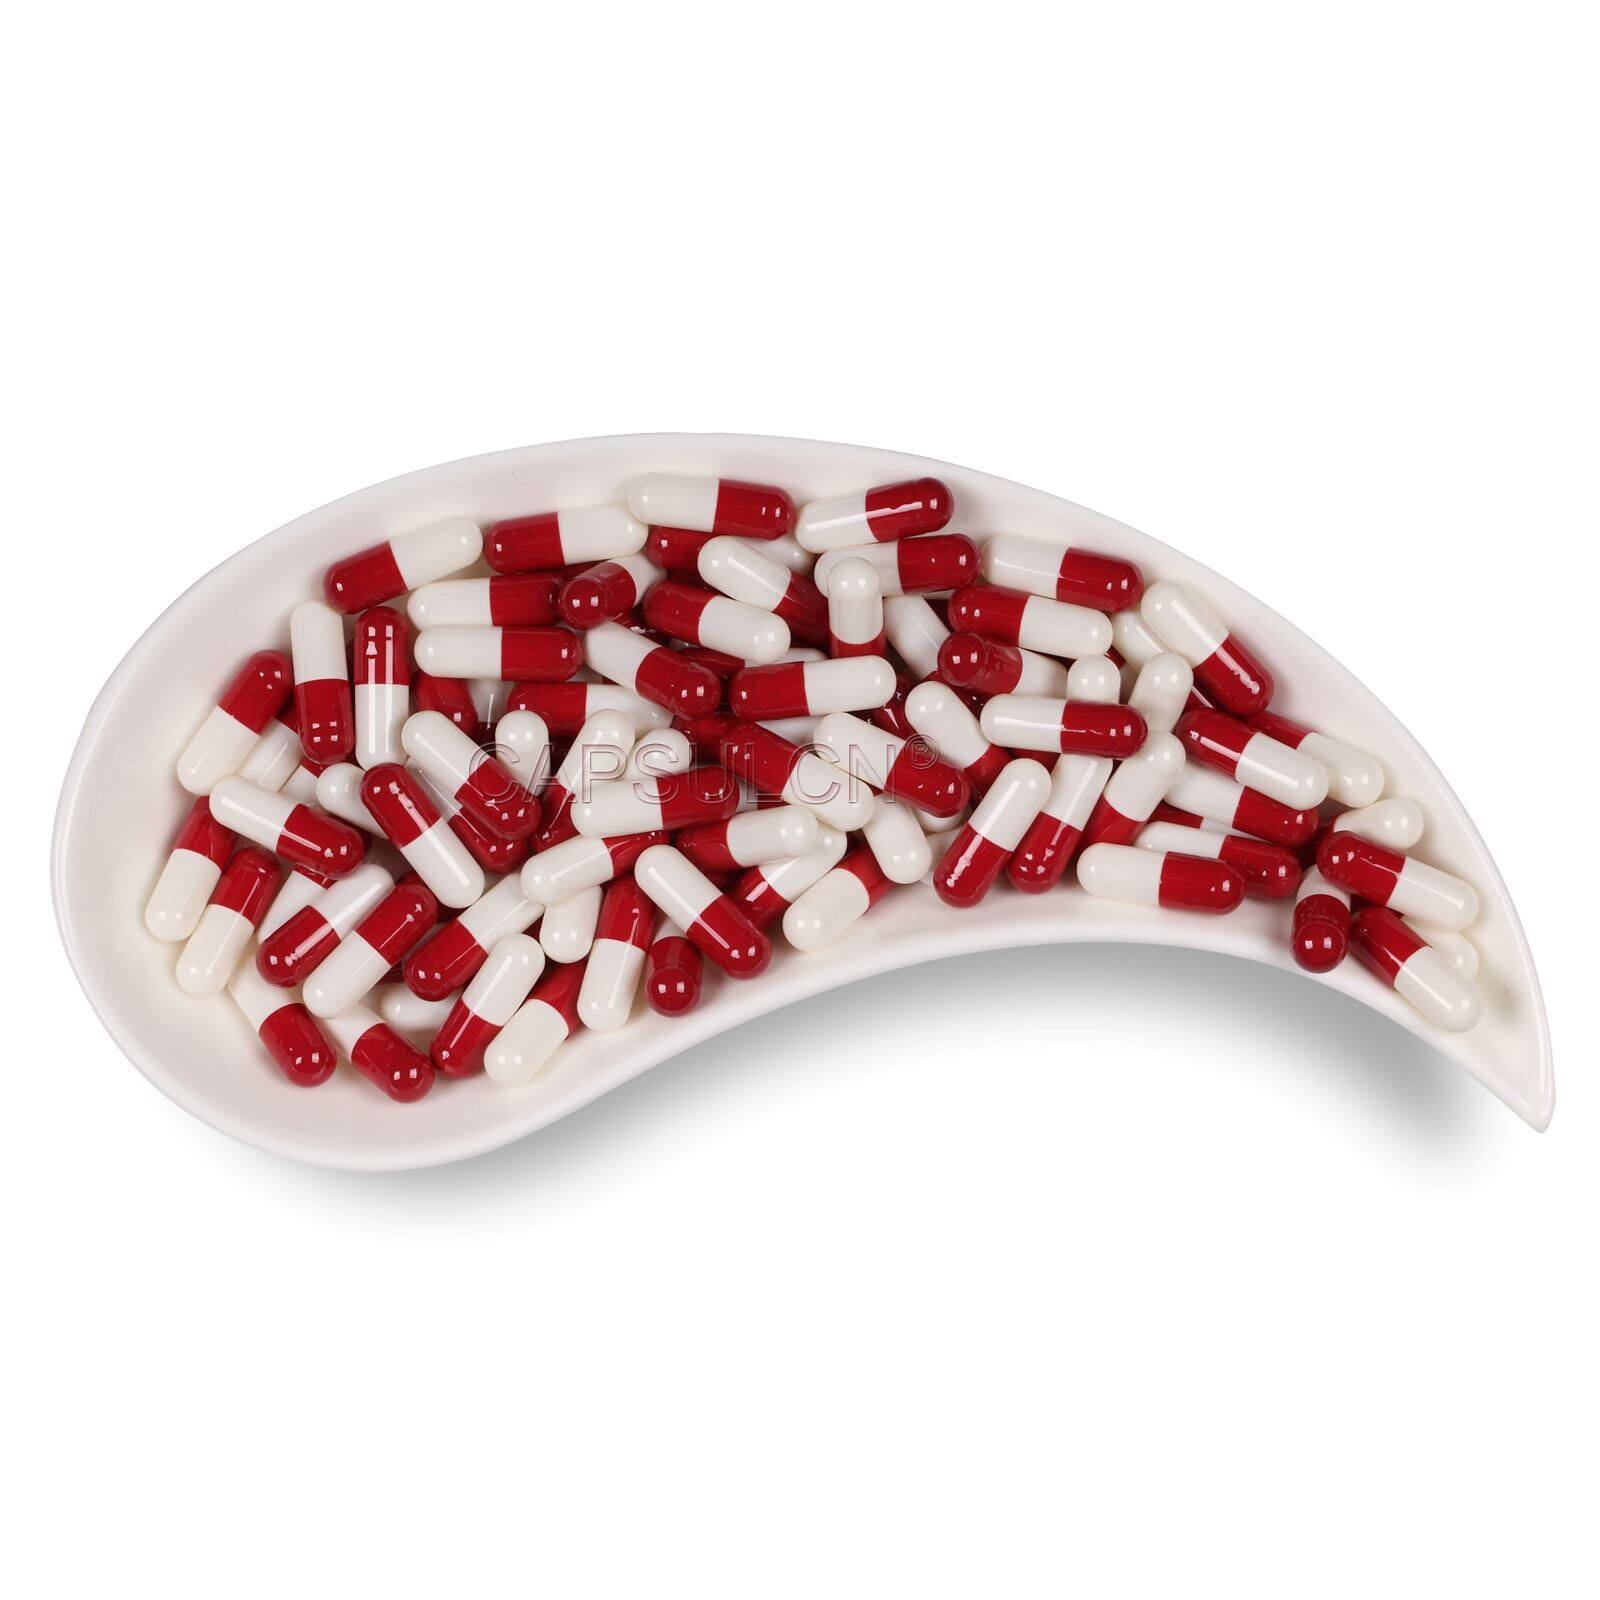 1000pcs/lot red white gelatin empty capsules, hollow gelatin capsules,  empty pill capsule,medicine capsule 0#